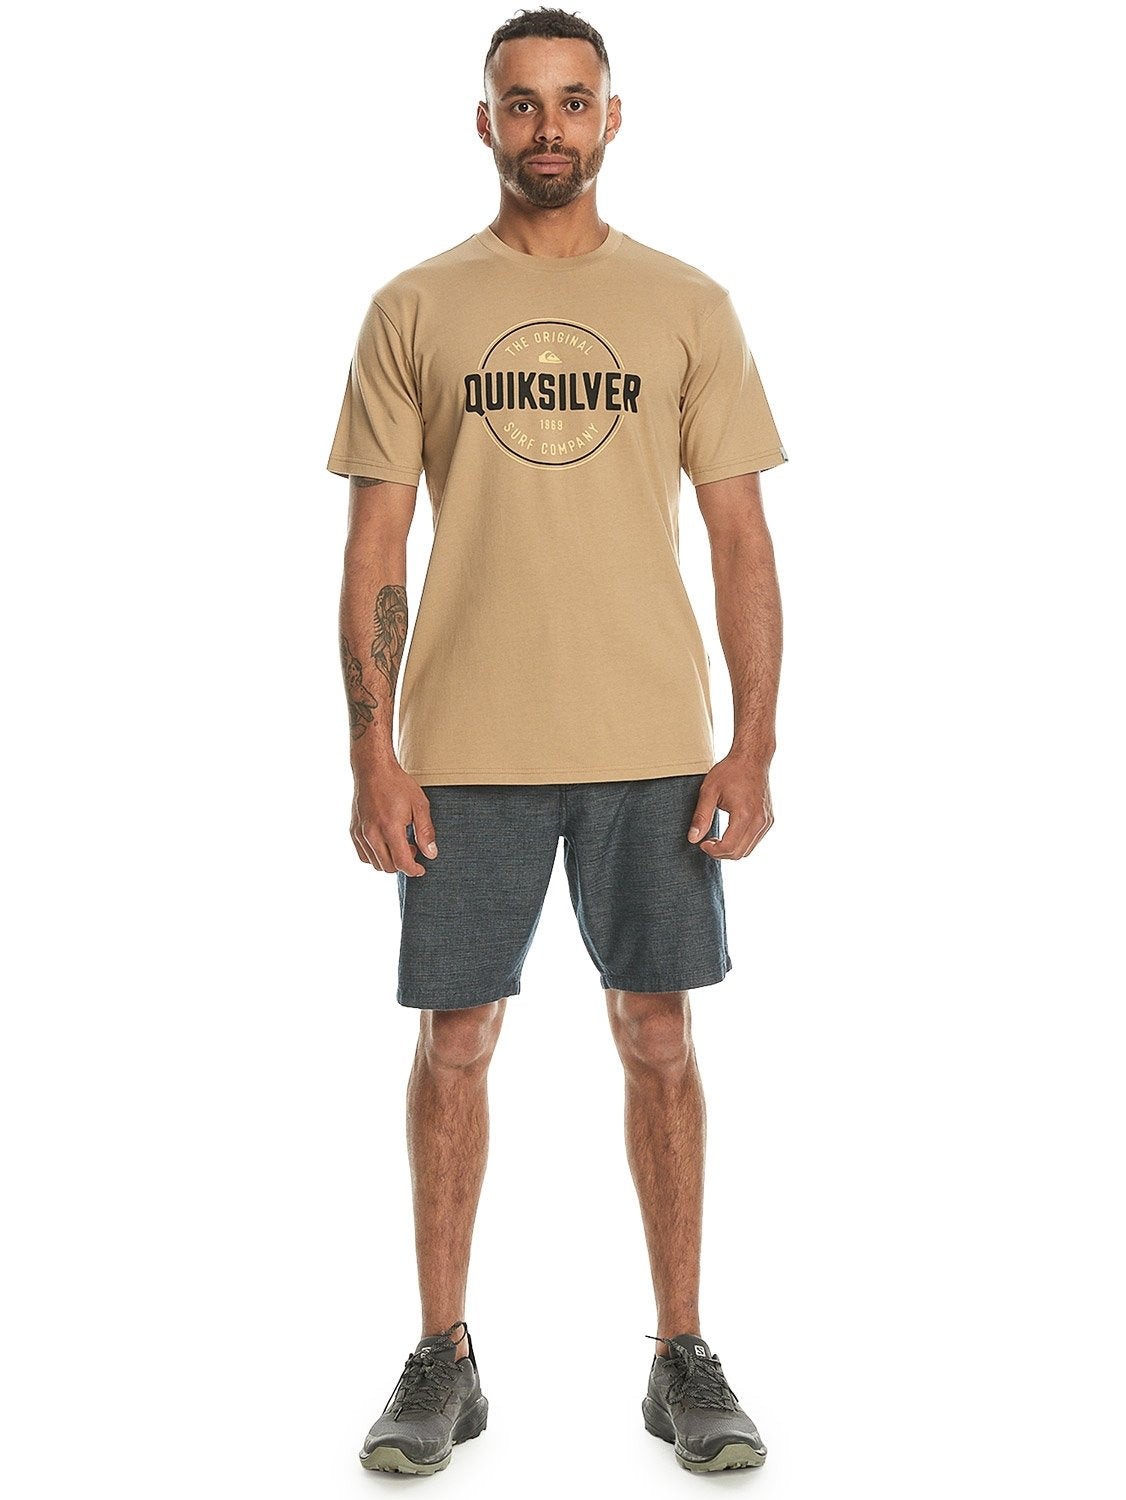 Quiksilver Men's Circle Up T-Shirt